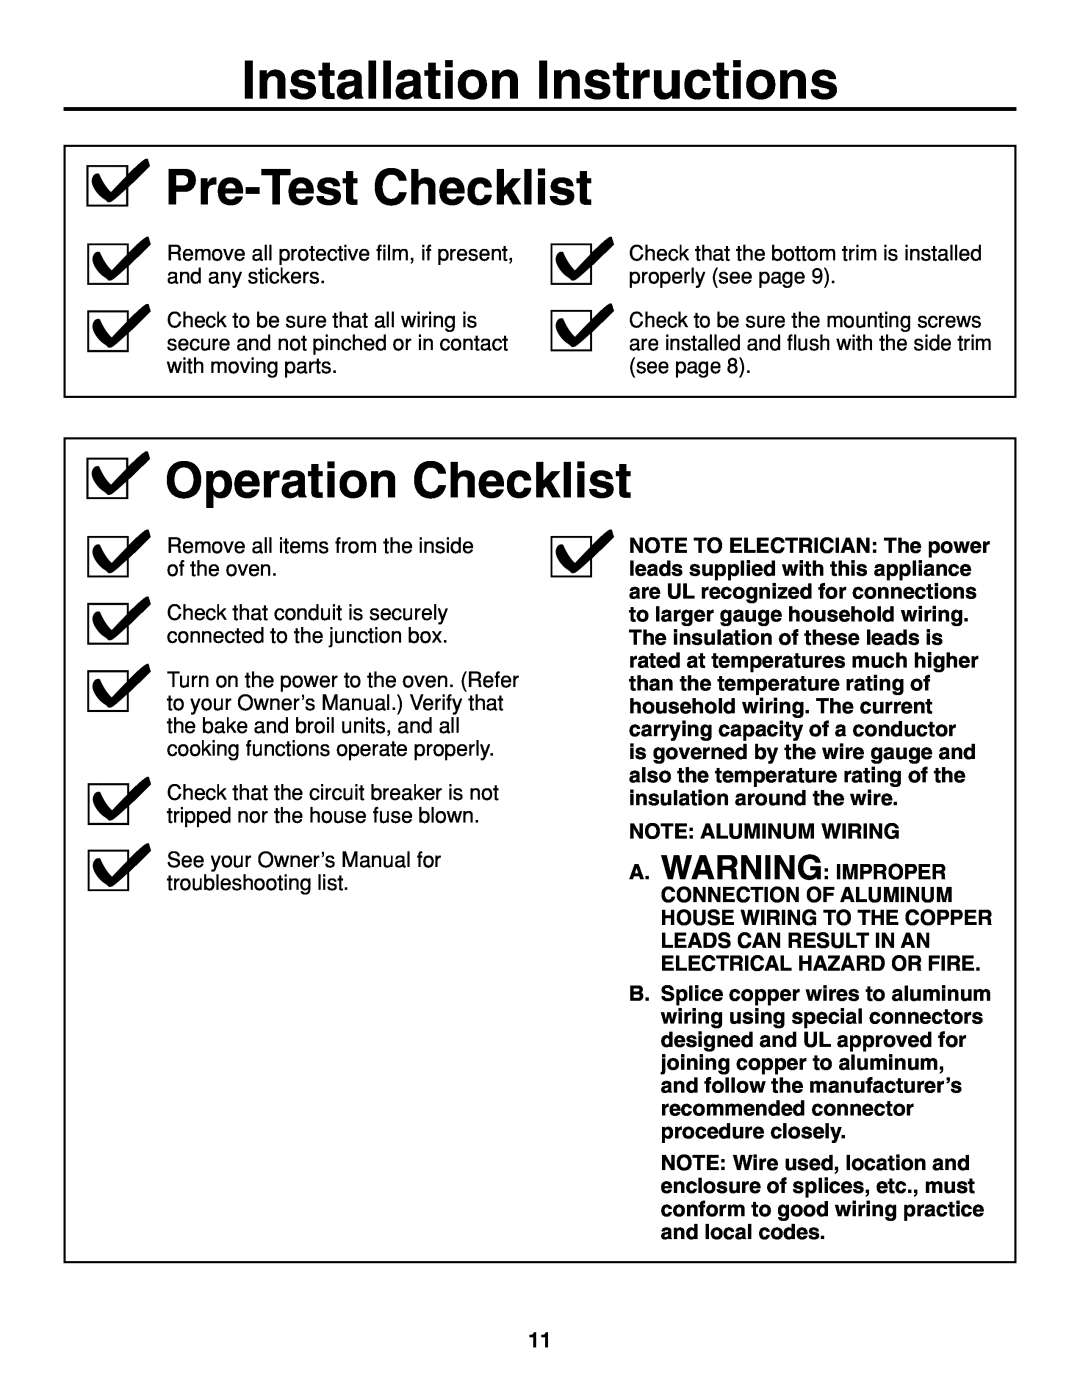 GE JTP86 installation instructions Operation Checklist, Installation Instructions, Pre-Test Checklist 